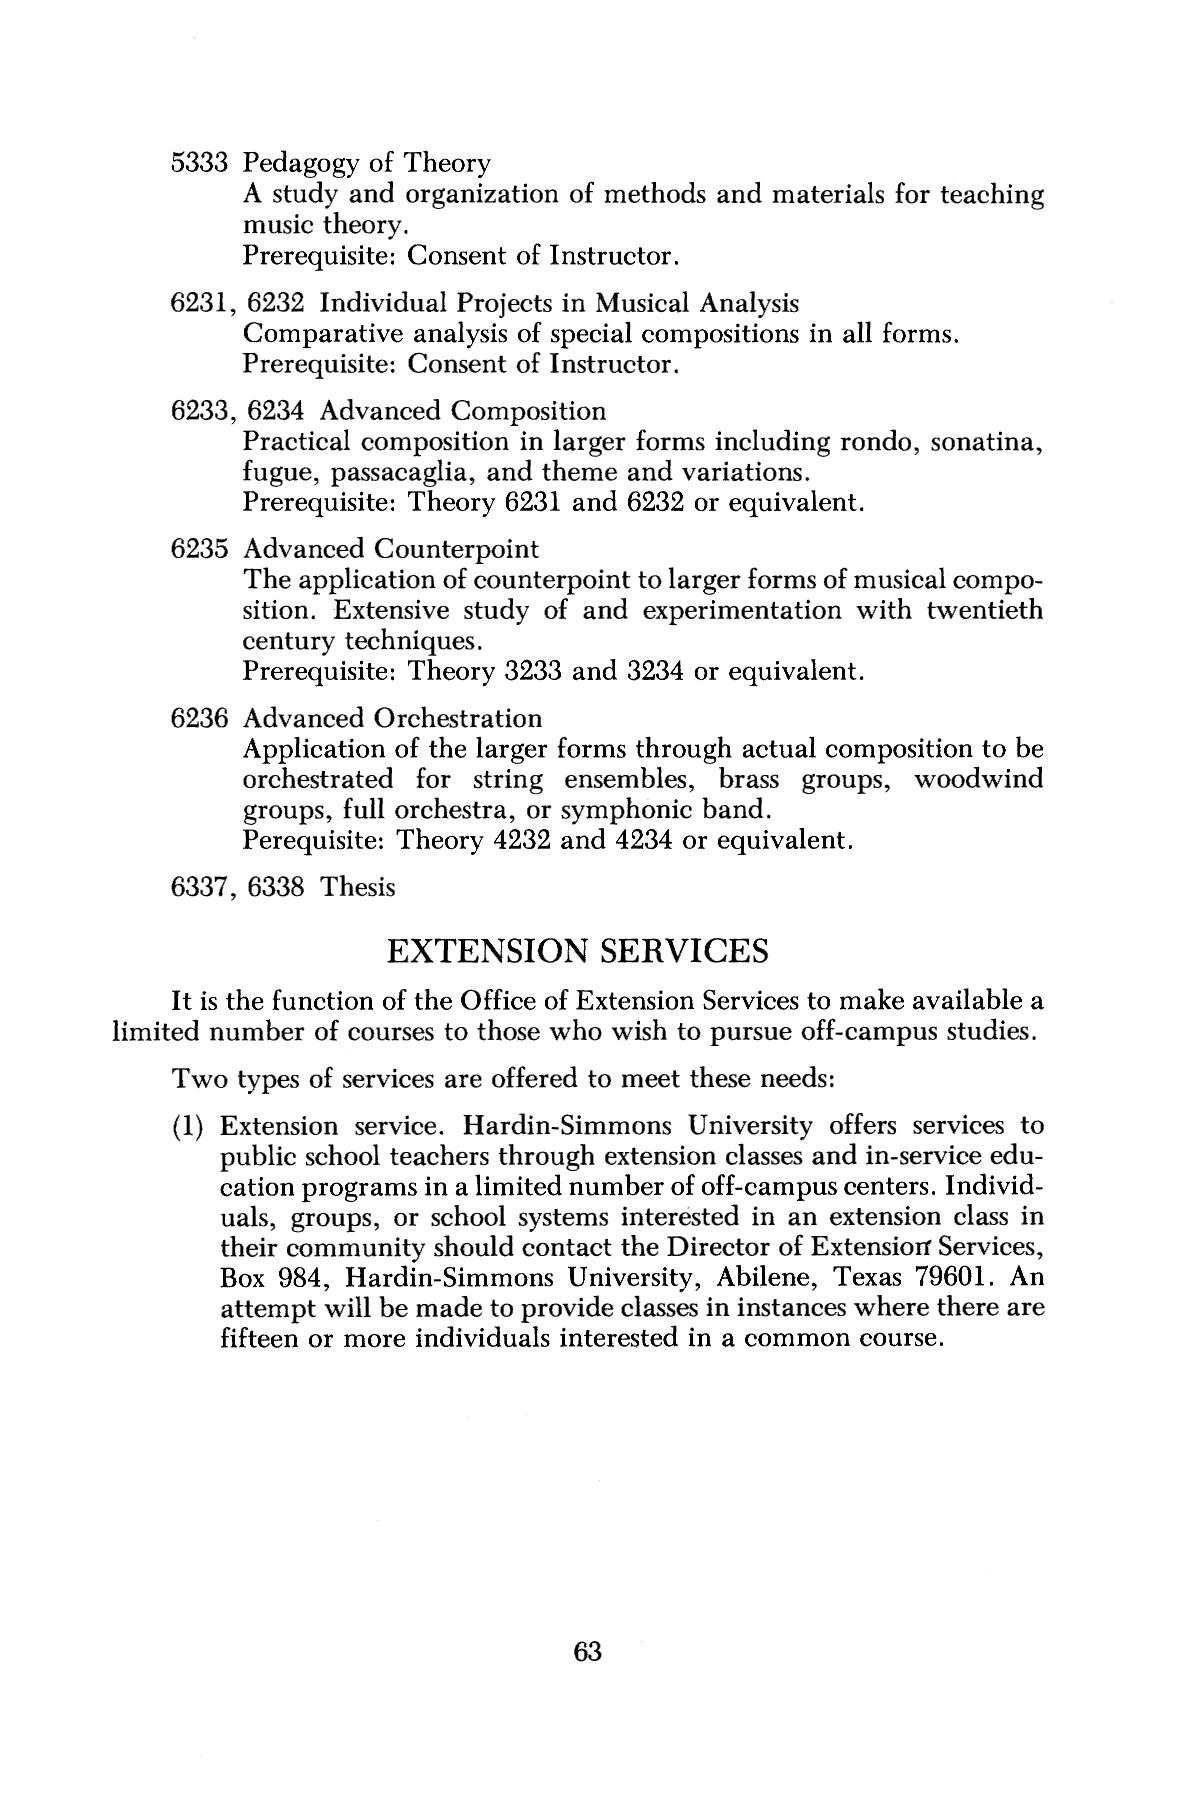 Catalog of Hardin-Simmons University, 1979-1980 Graduate Bulletin
                                                
                                                    63
                                                